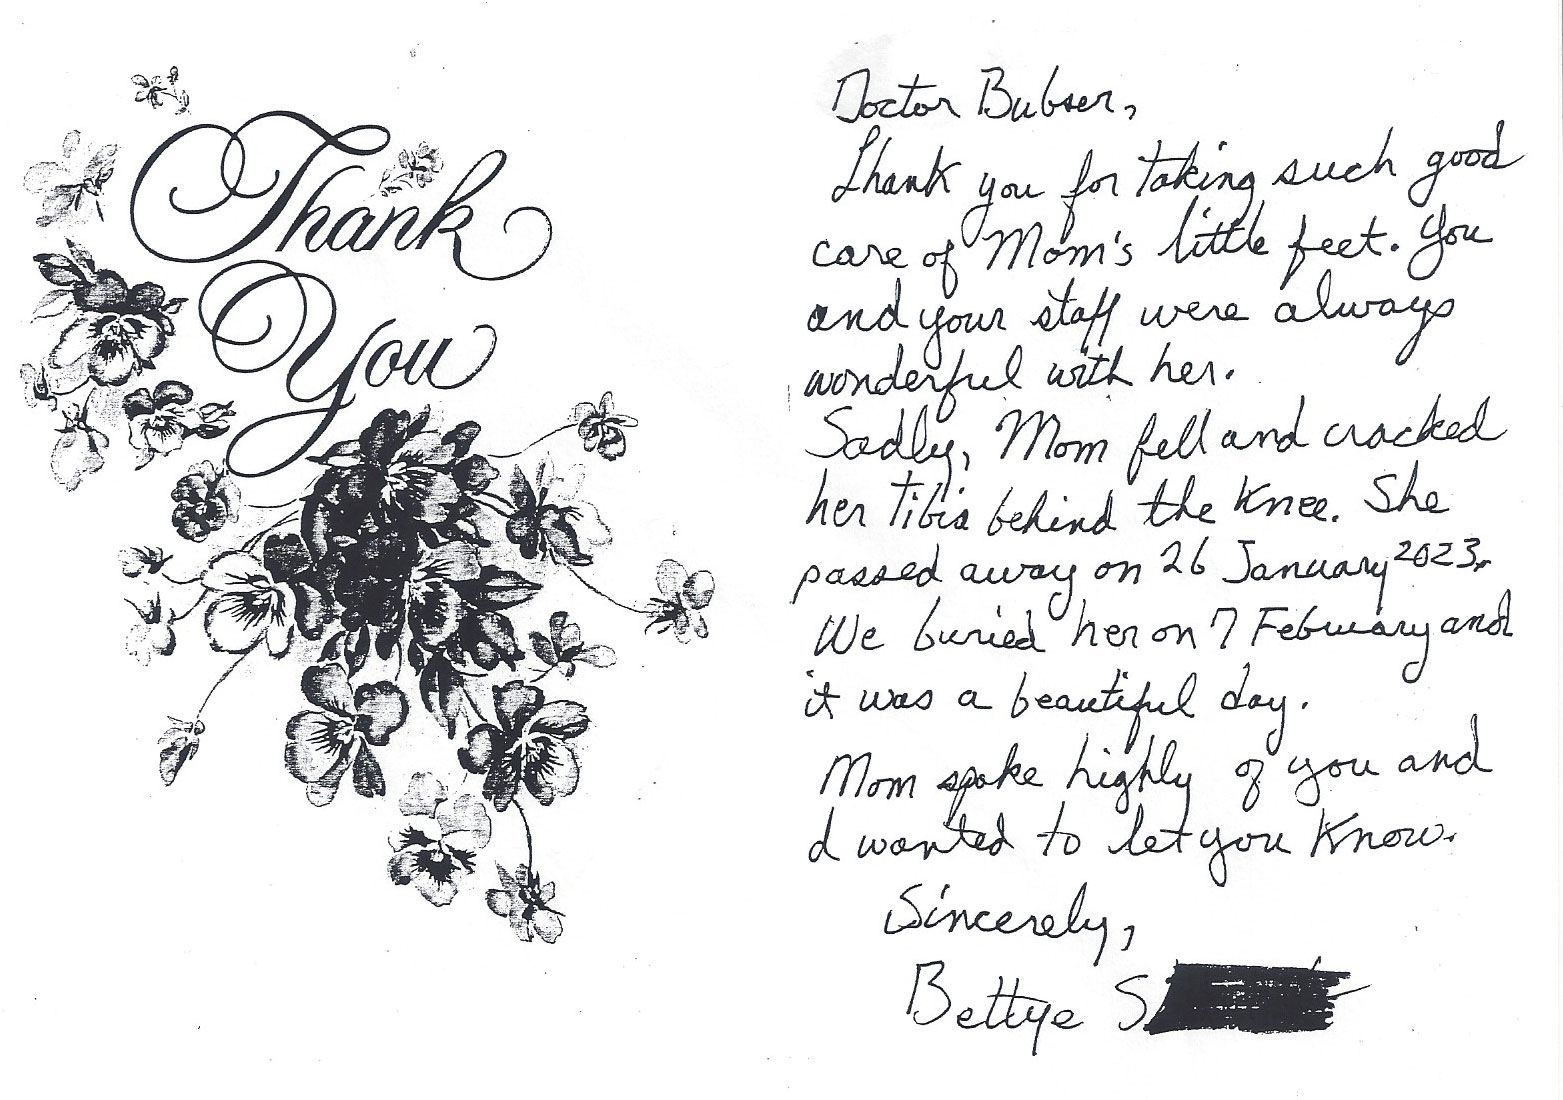 Bettye S hand-written review